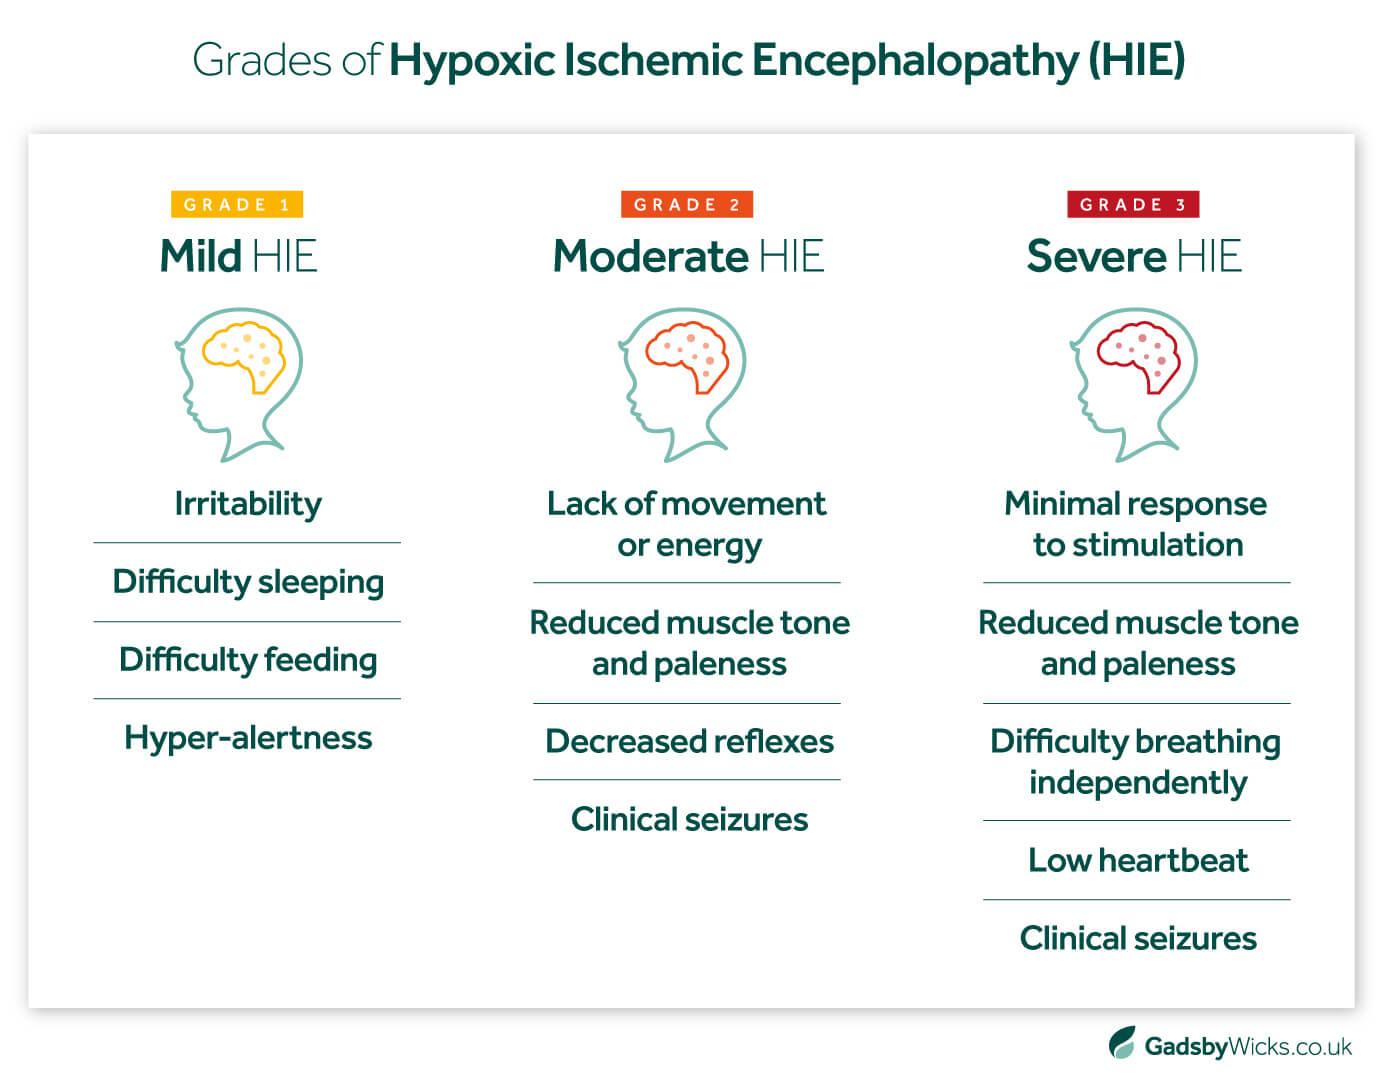 Grades of Hypoxic Ischemic Encephalopathy (HIE) Infographic